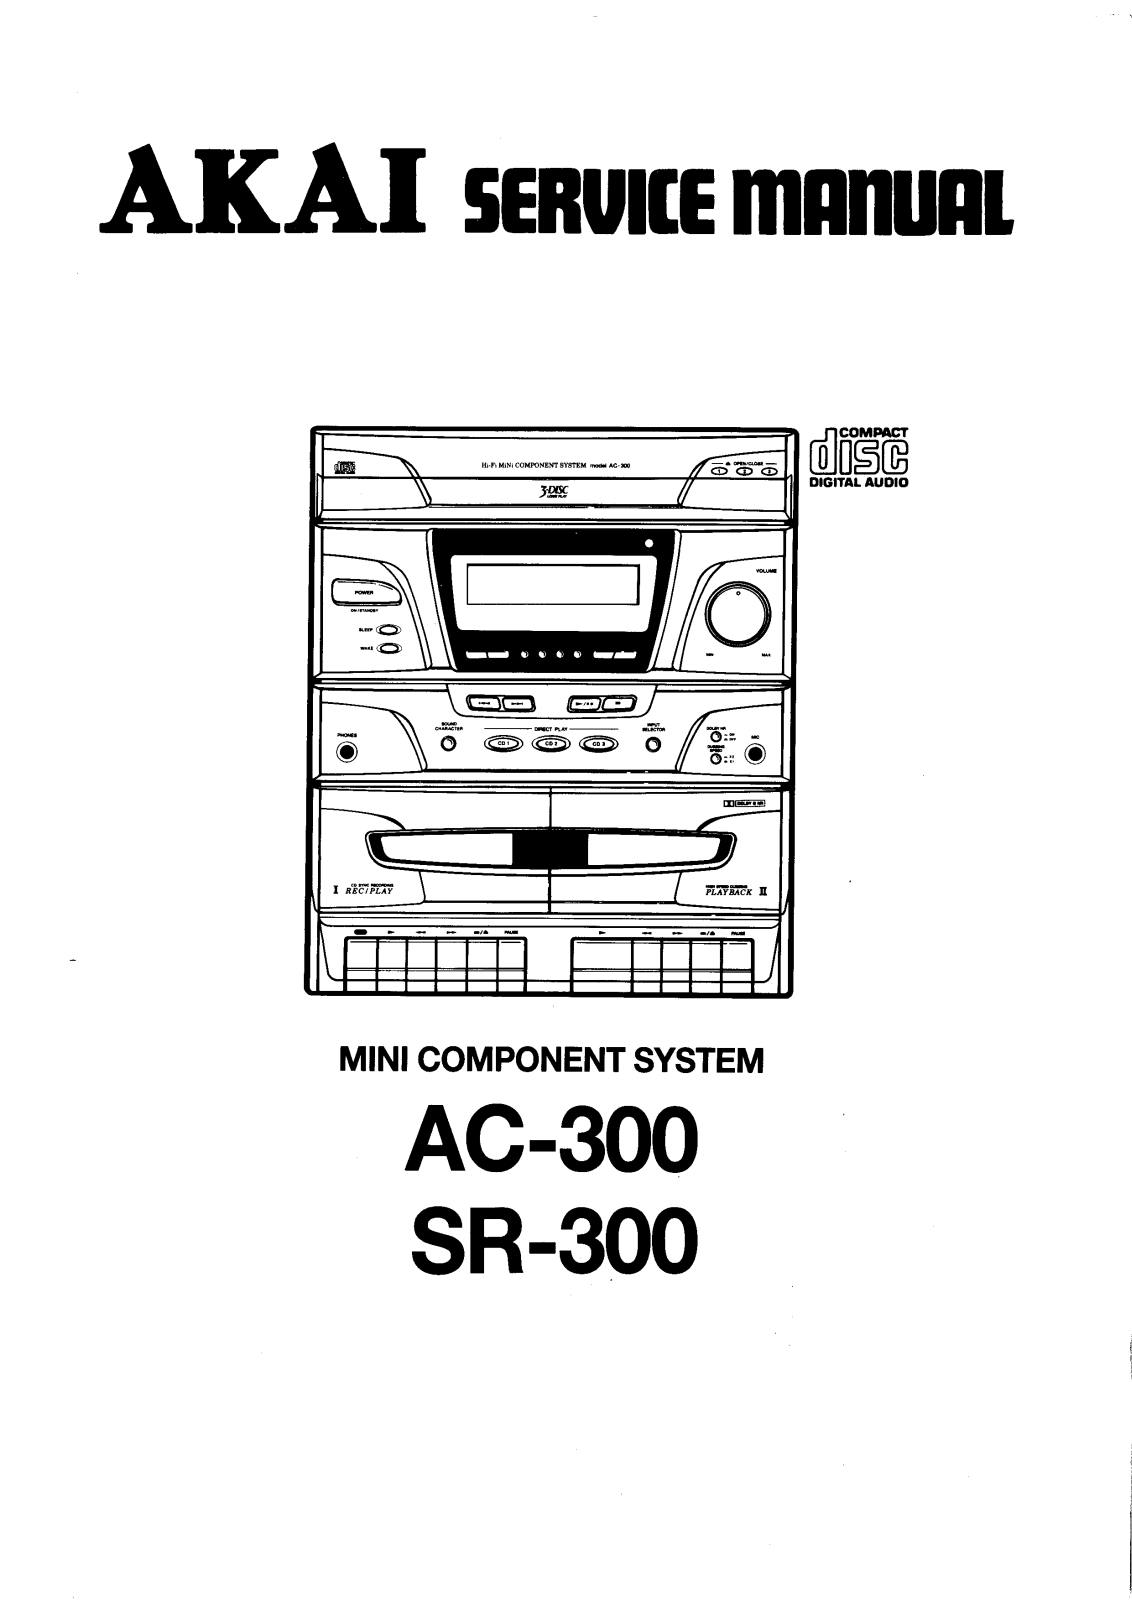 Akai AC-300 Service Manual